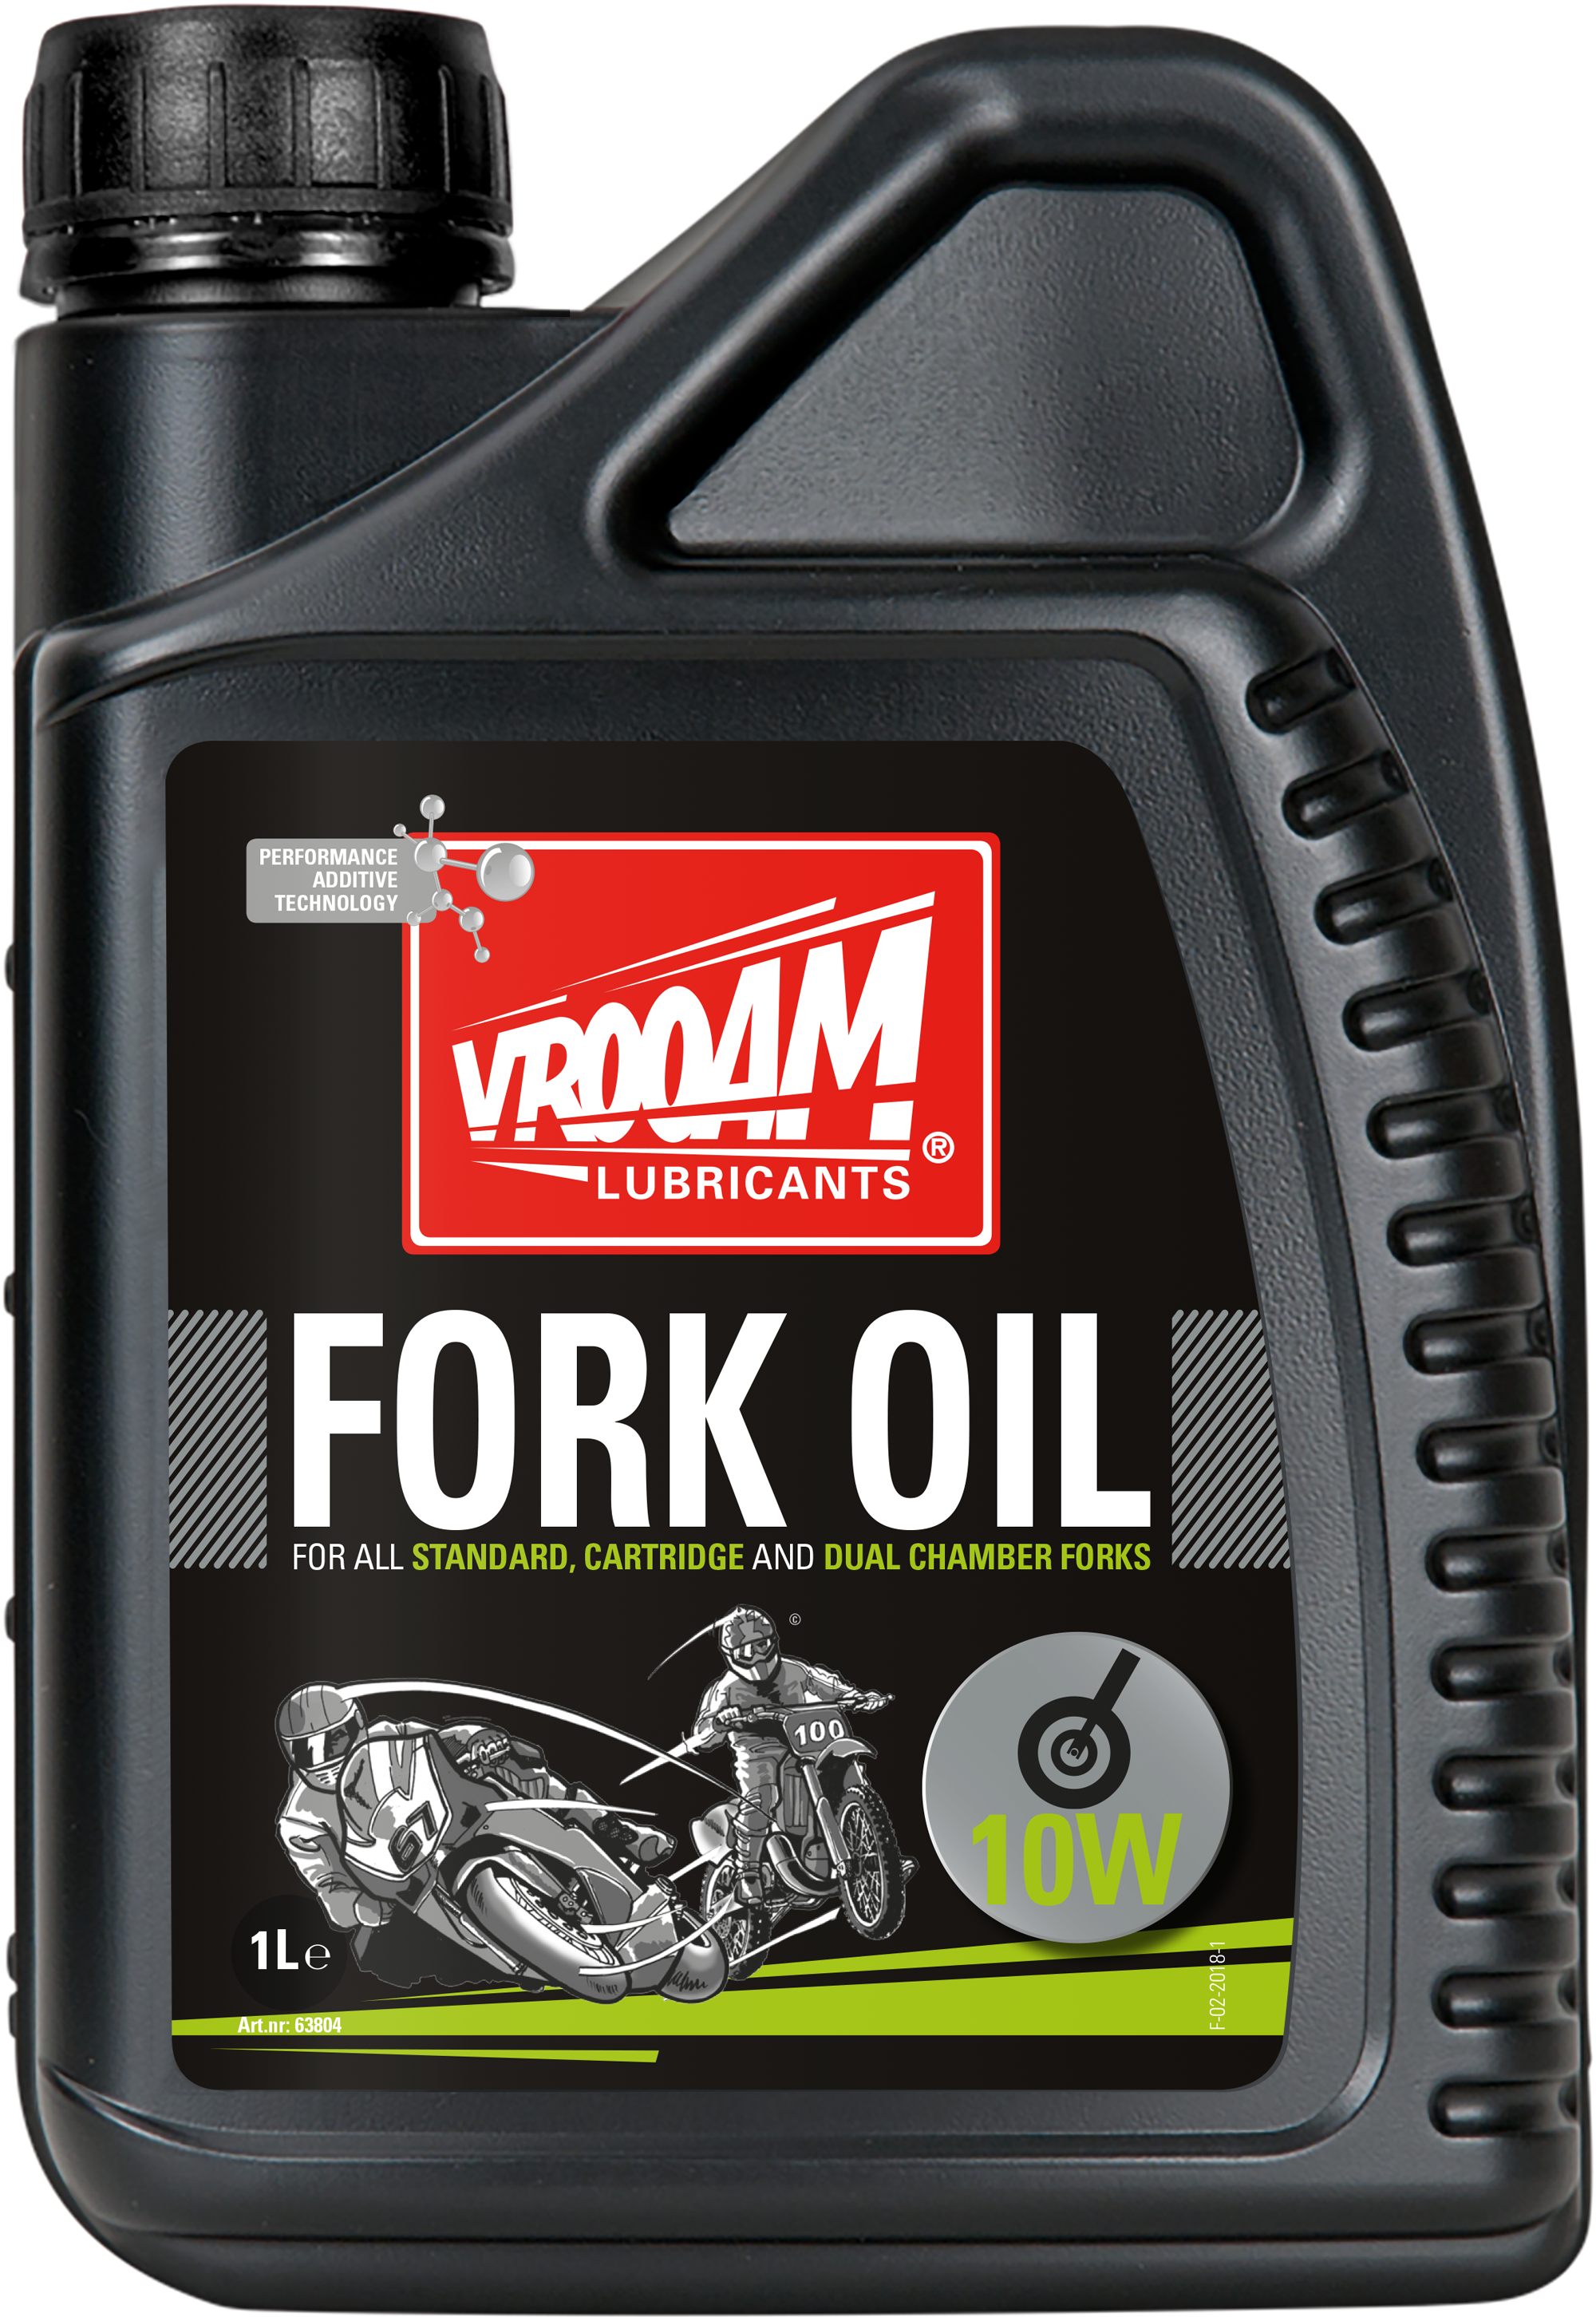 Vrooam Fork Oil 10W 1 L Size